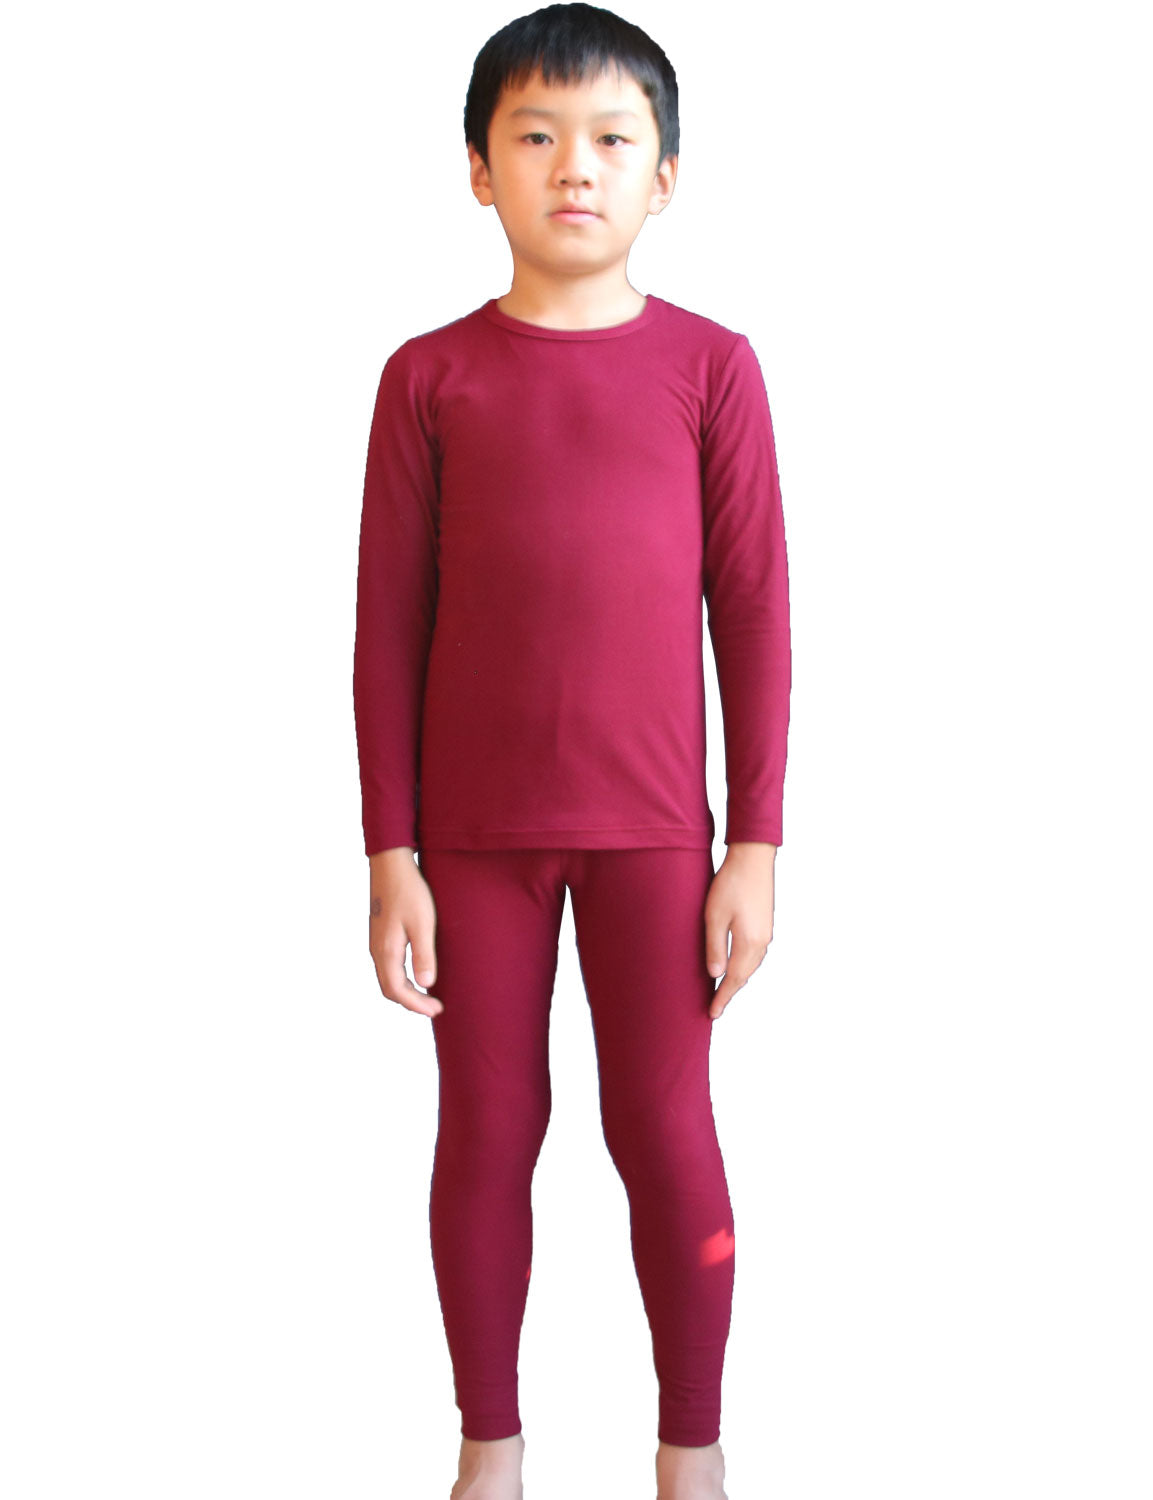 LUXUR Kids Thermal Underwear Set Fleece Lined Long Johns Elastic